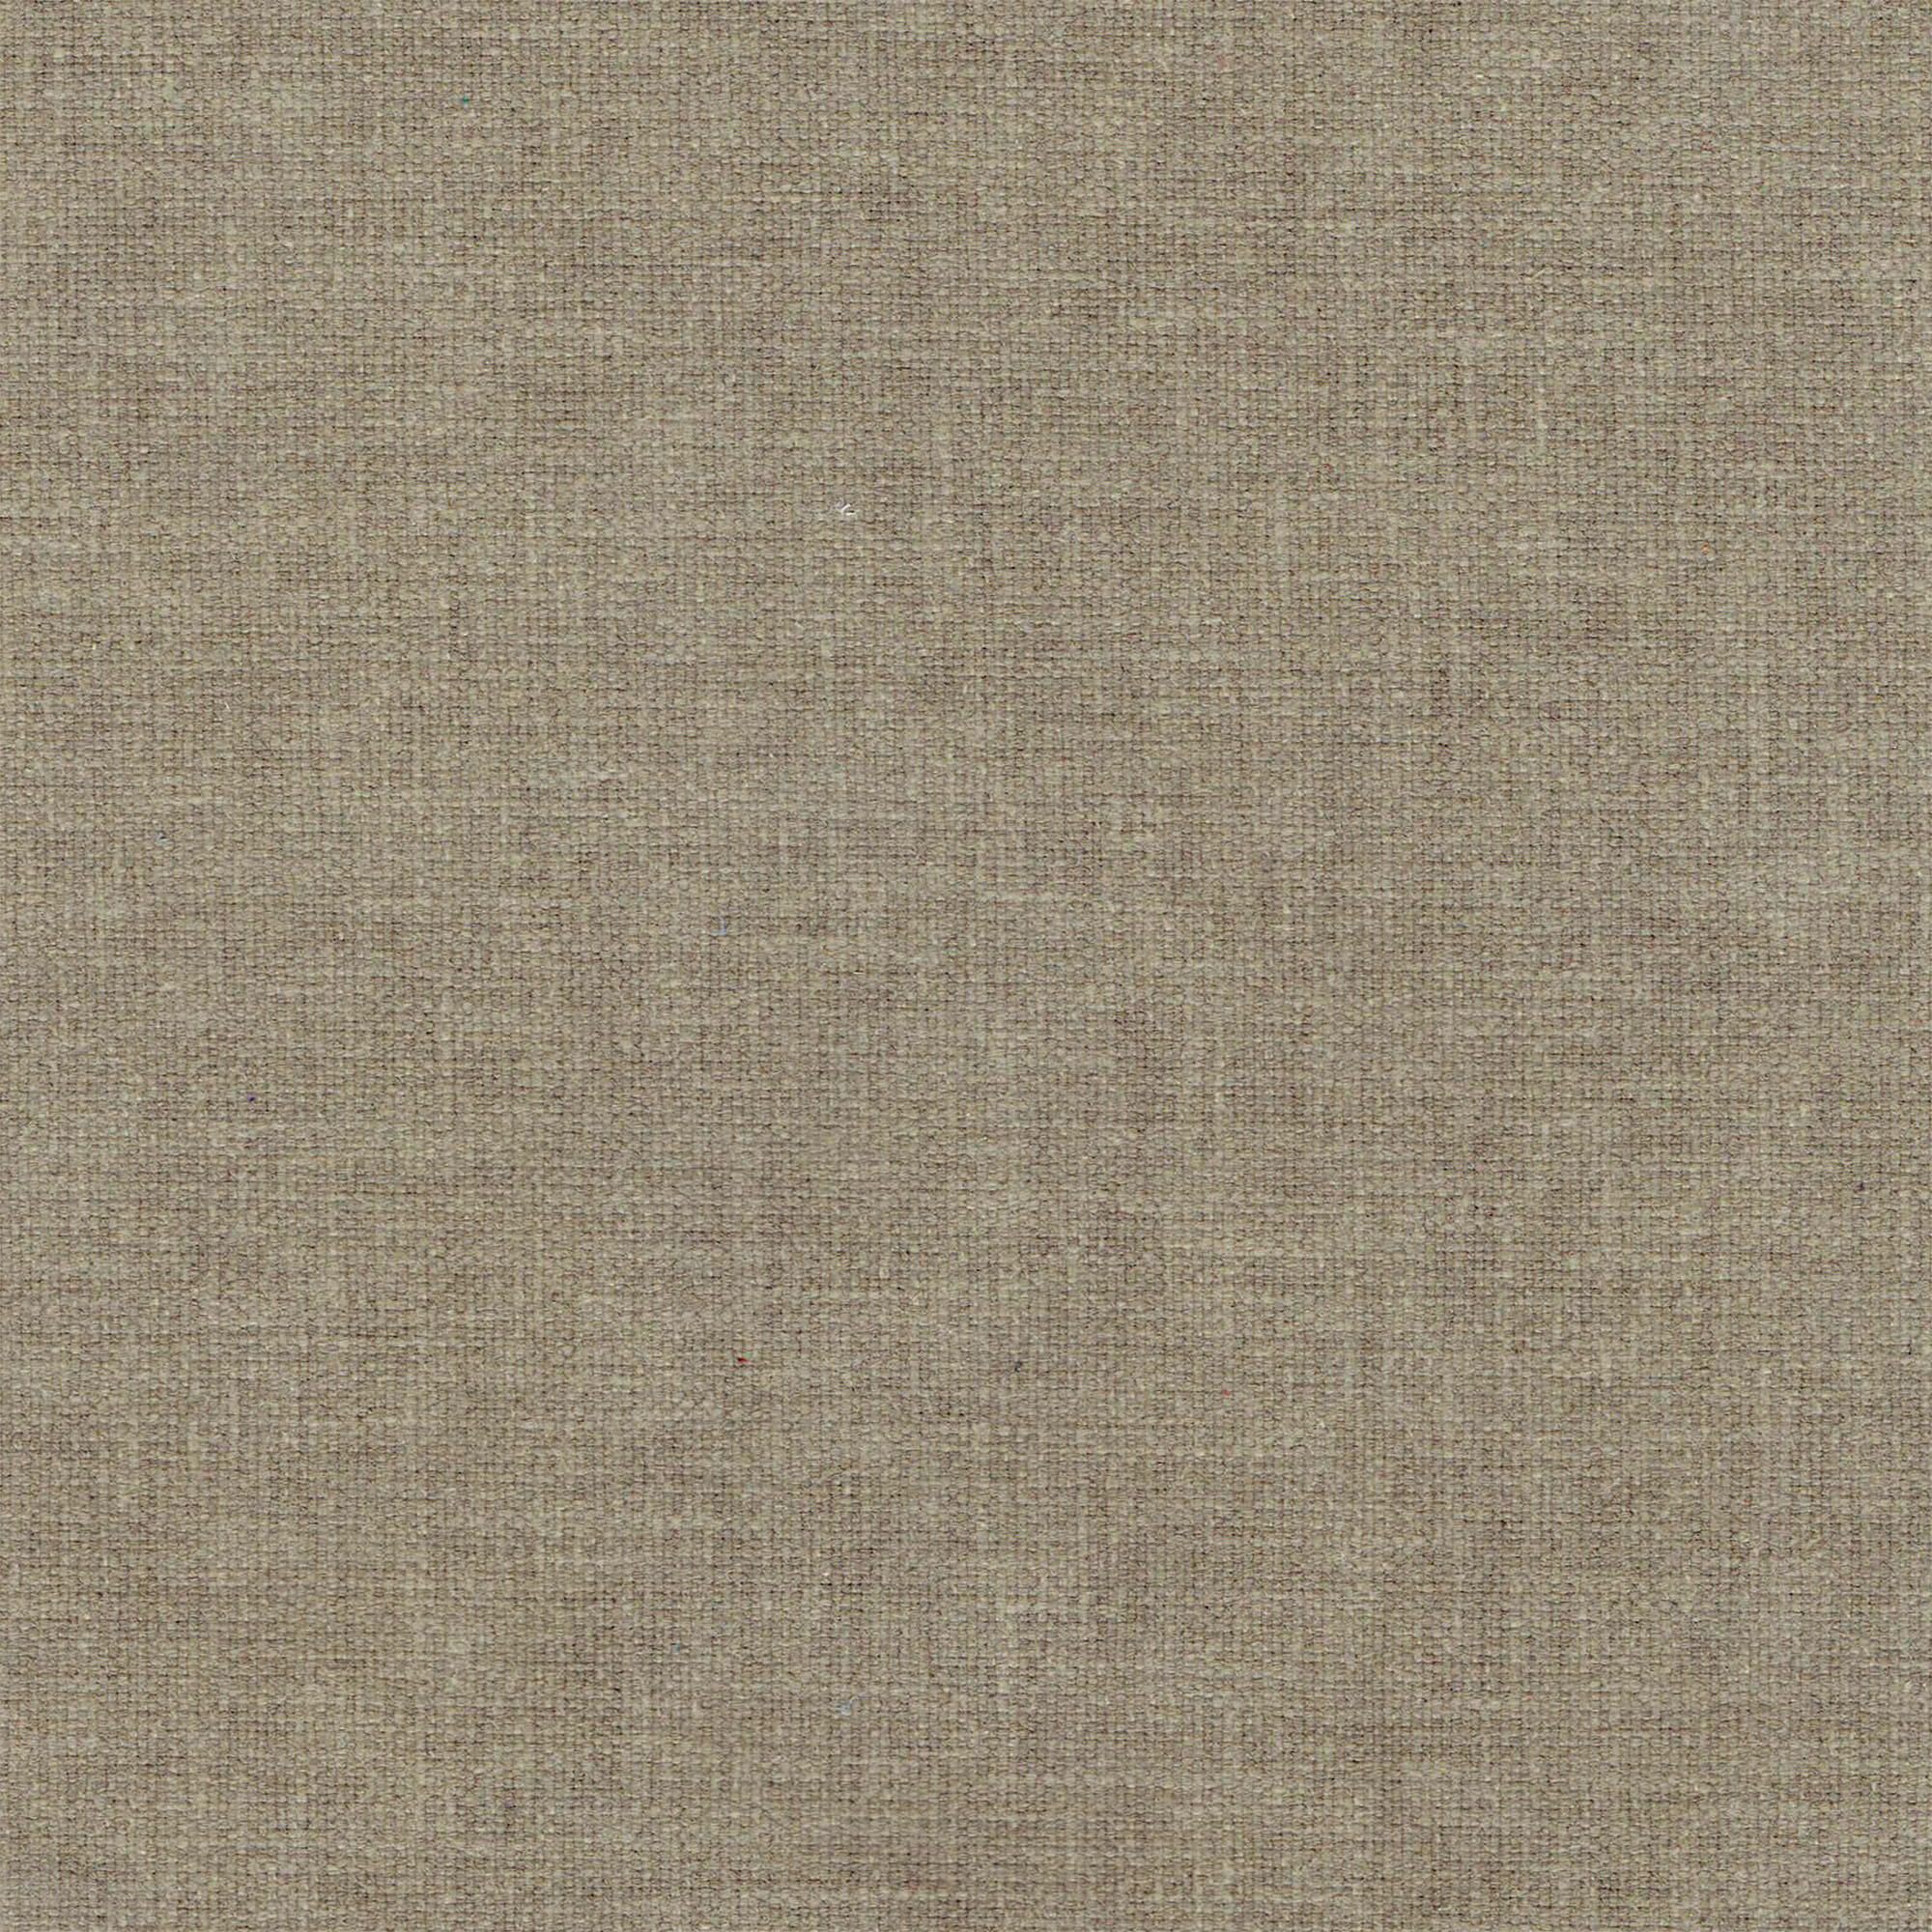 Cotton Blend Saffari Fabric Swatch 6" X 6"